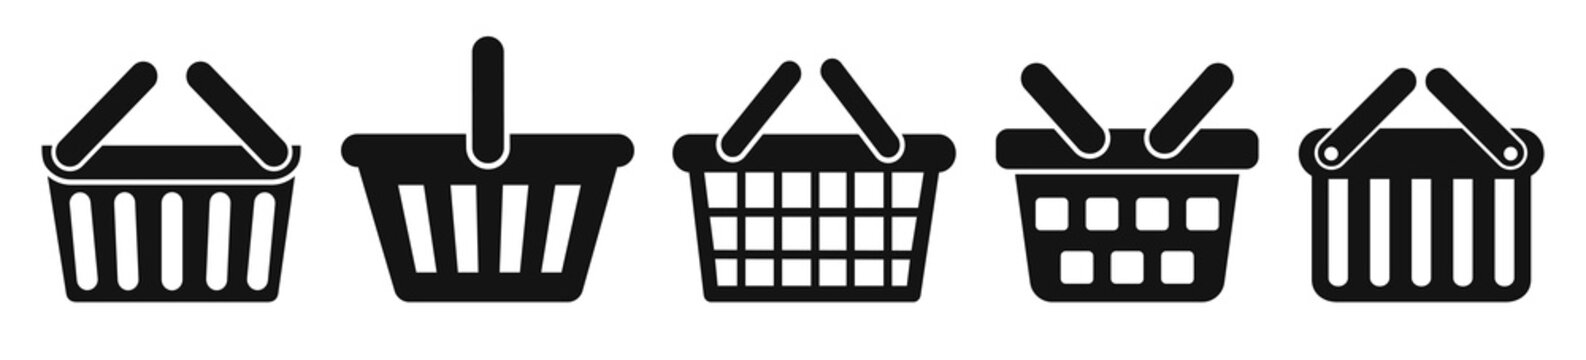 Set shopping basket icons, buy symbol. Shop handbag icon – stock vector